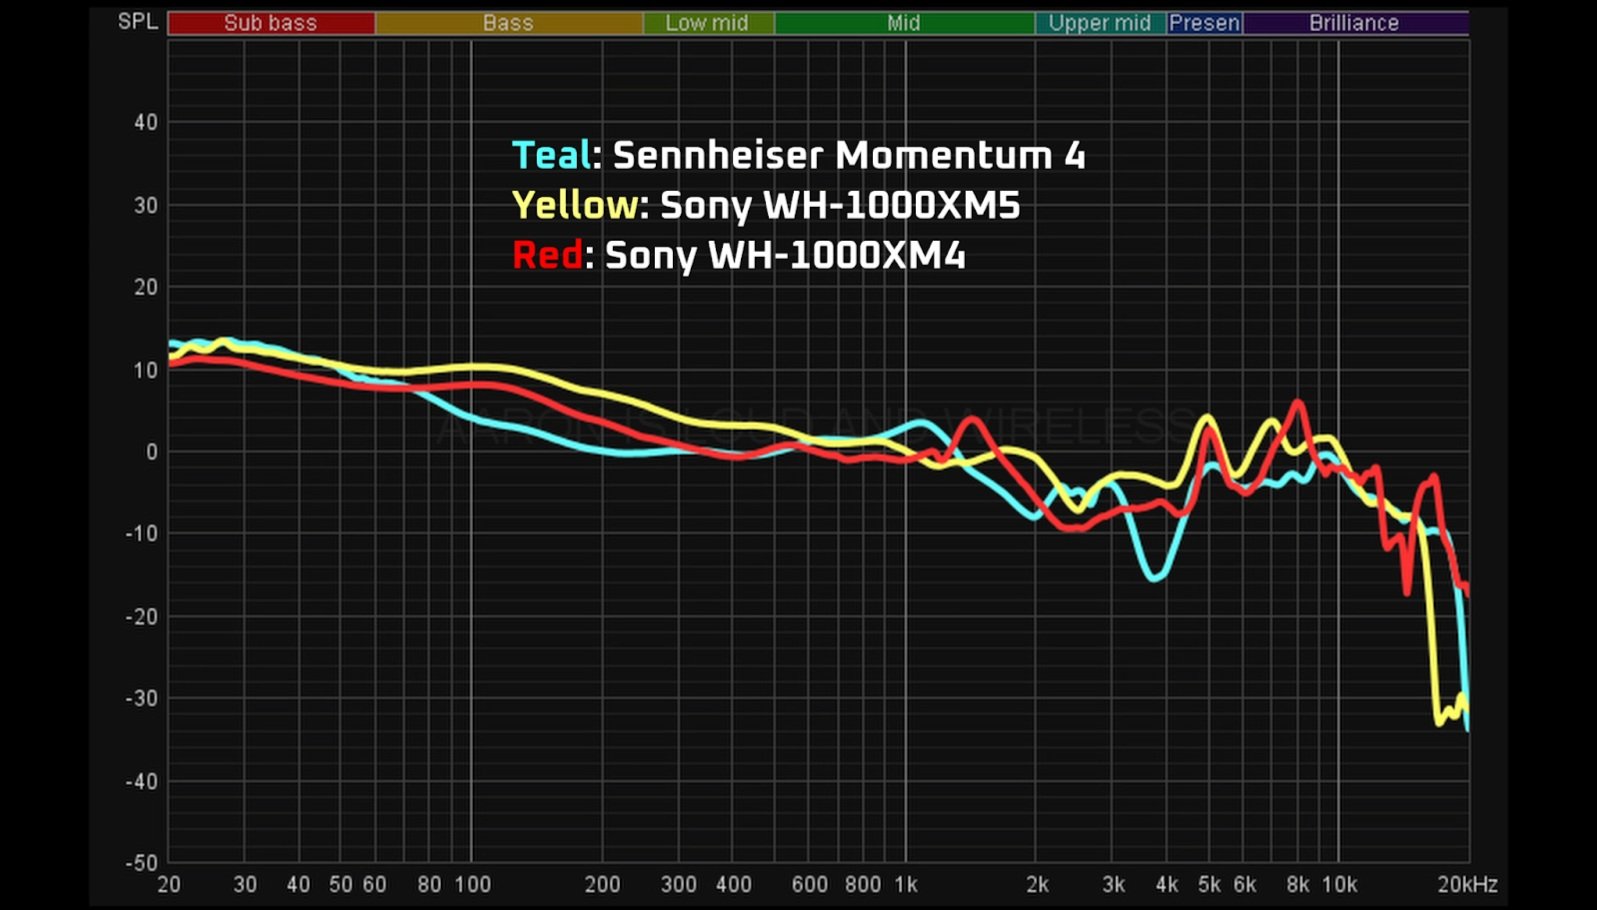 Sennheiser Momentum 4 vs Sony WH-1000XM4 vs WH-1000XM5 - Reviewed